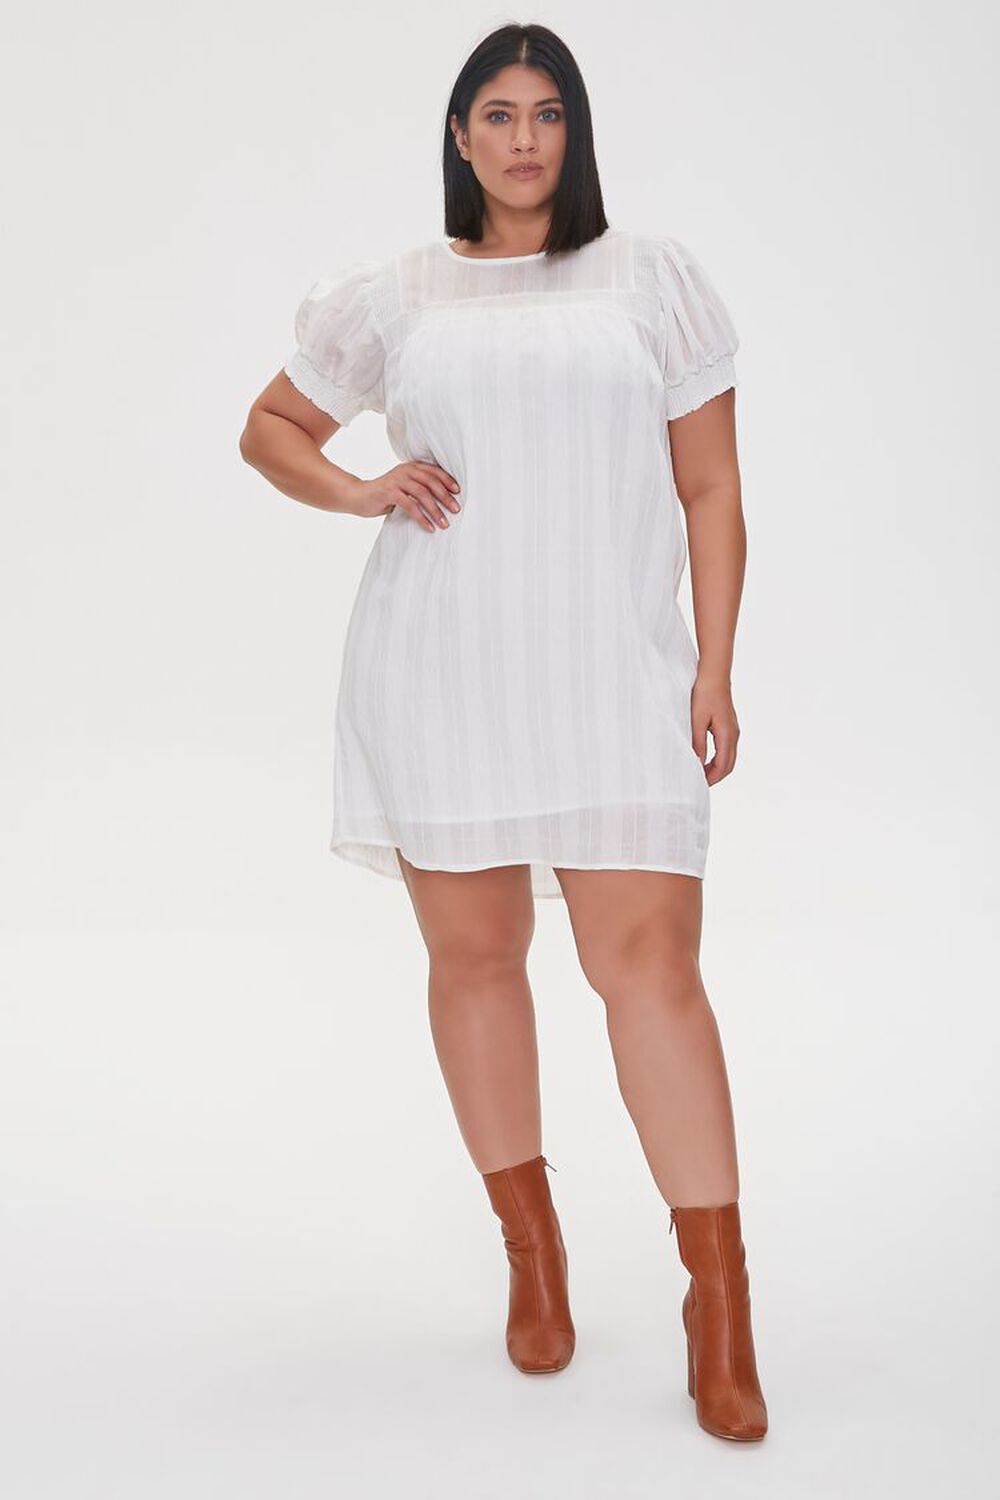 WHITE Plus Size Striped Mini Dress, image 1